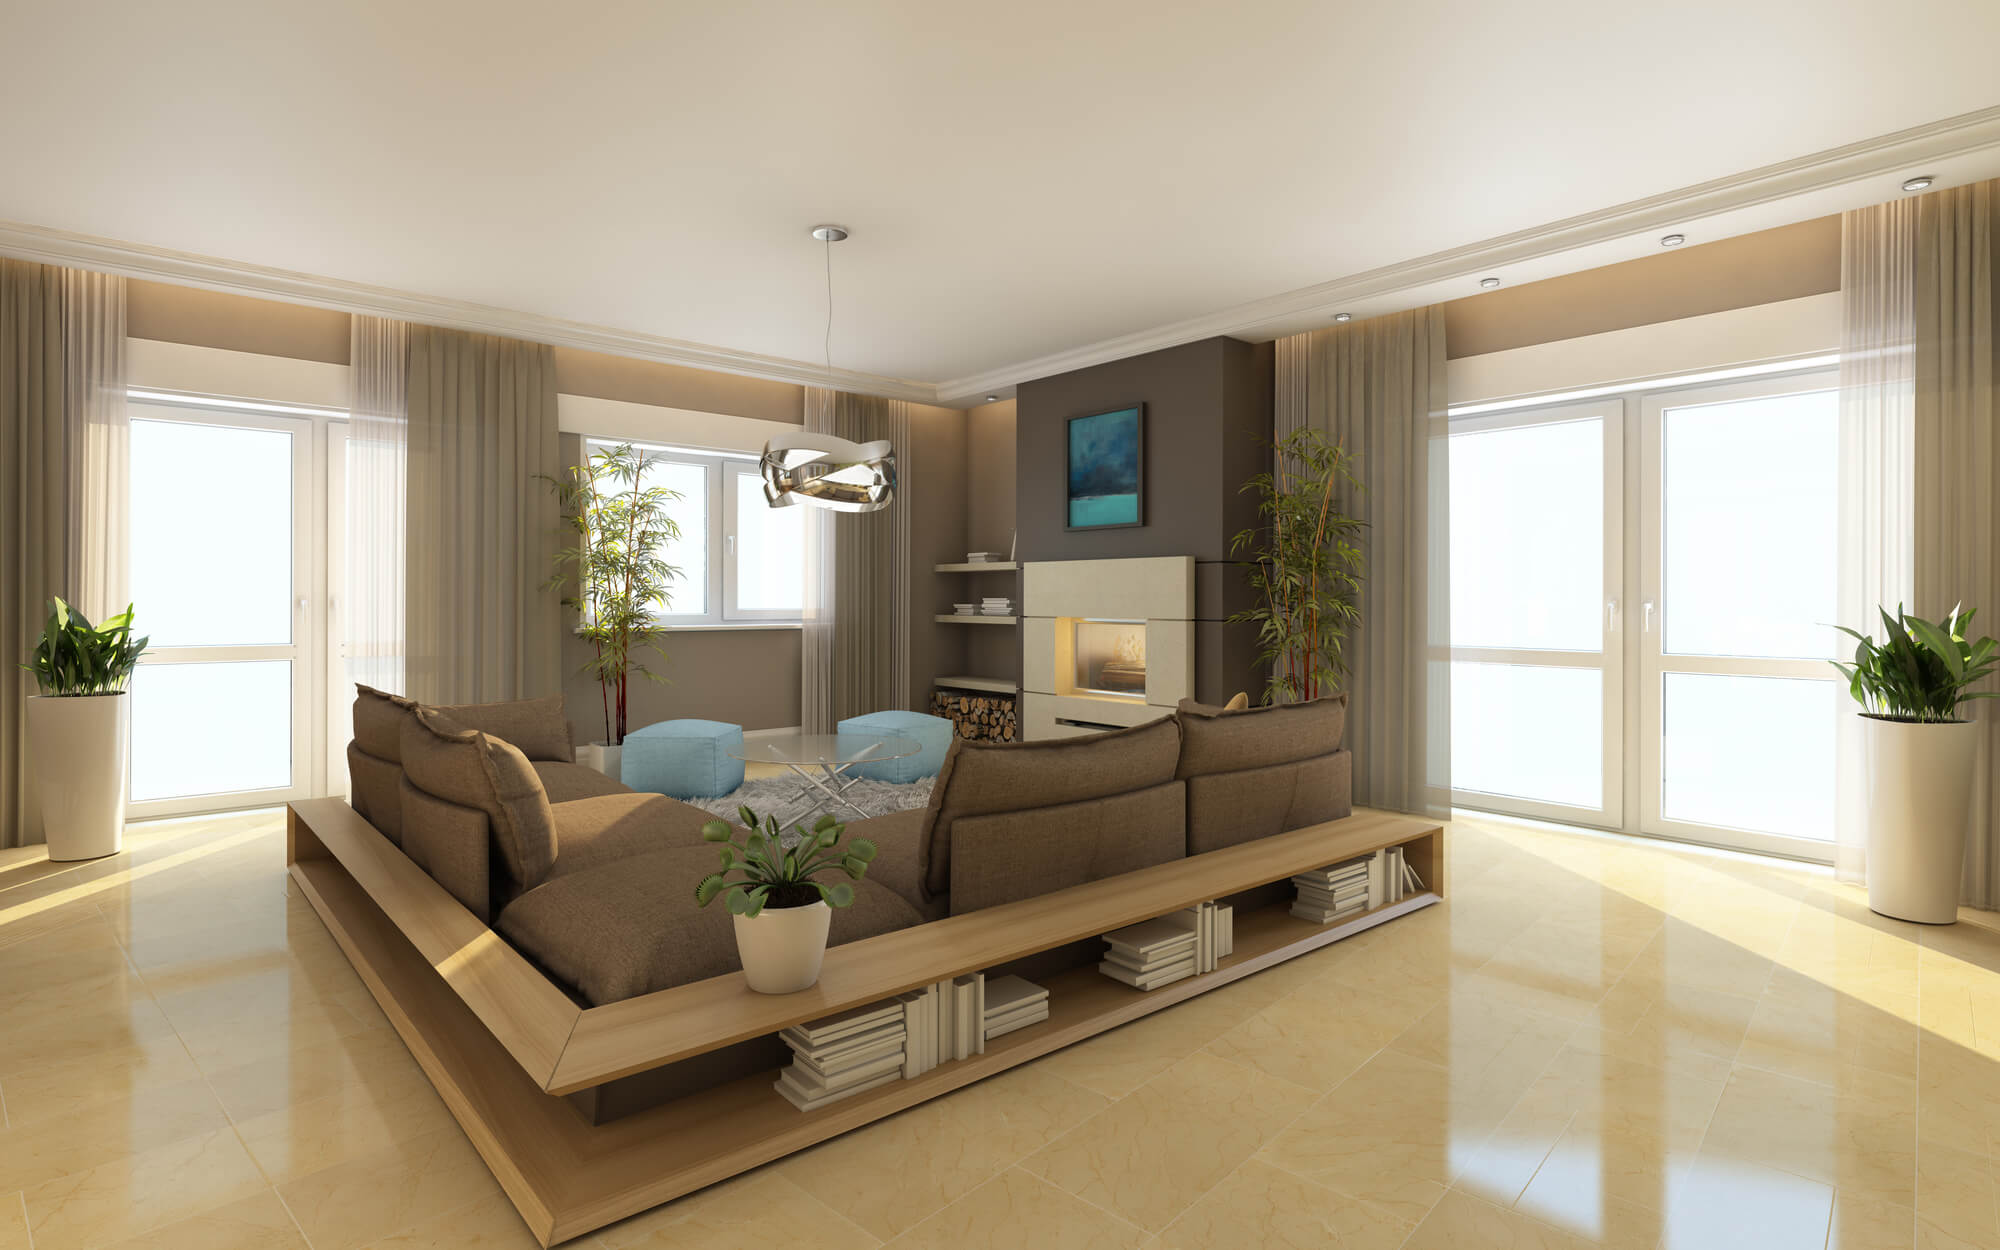 a warm coloured living room